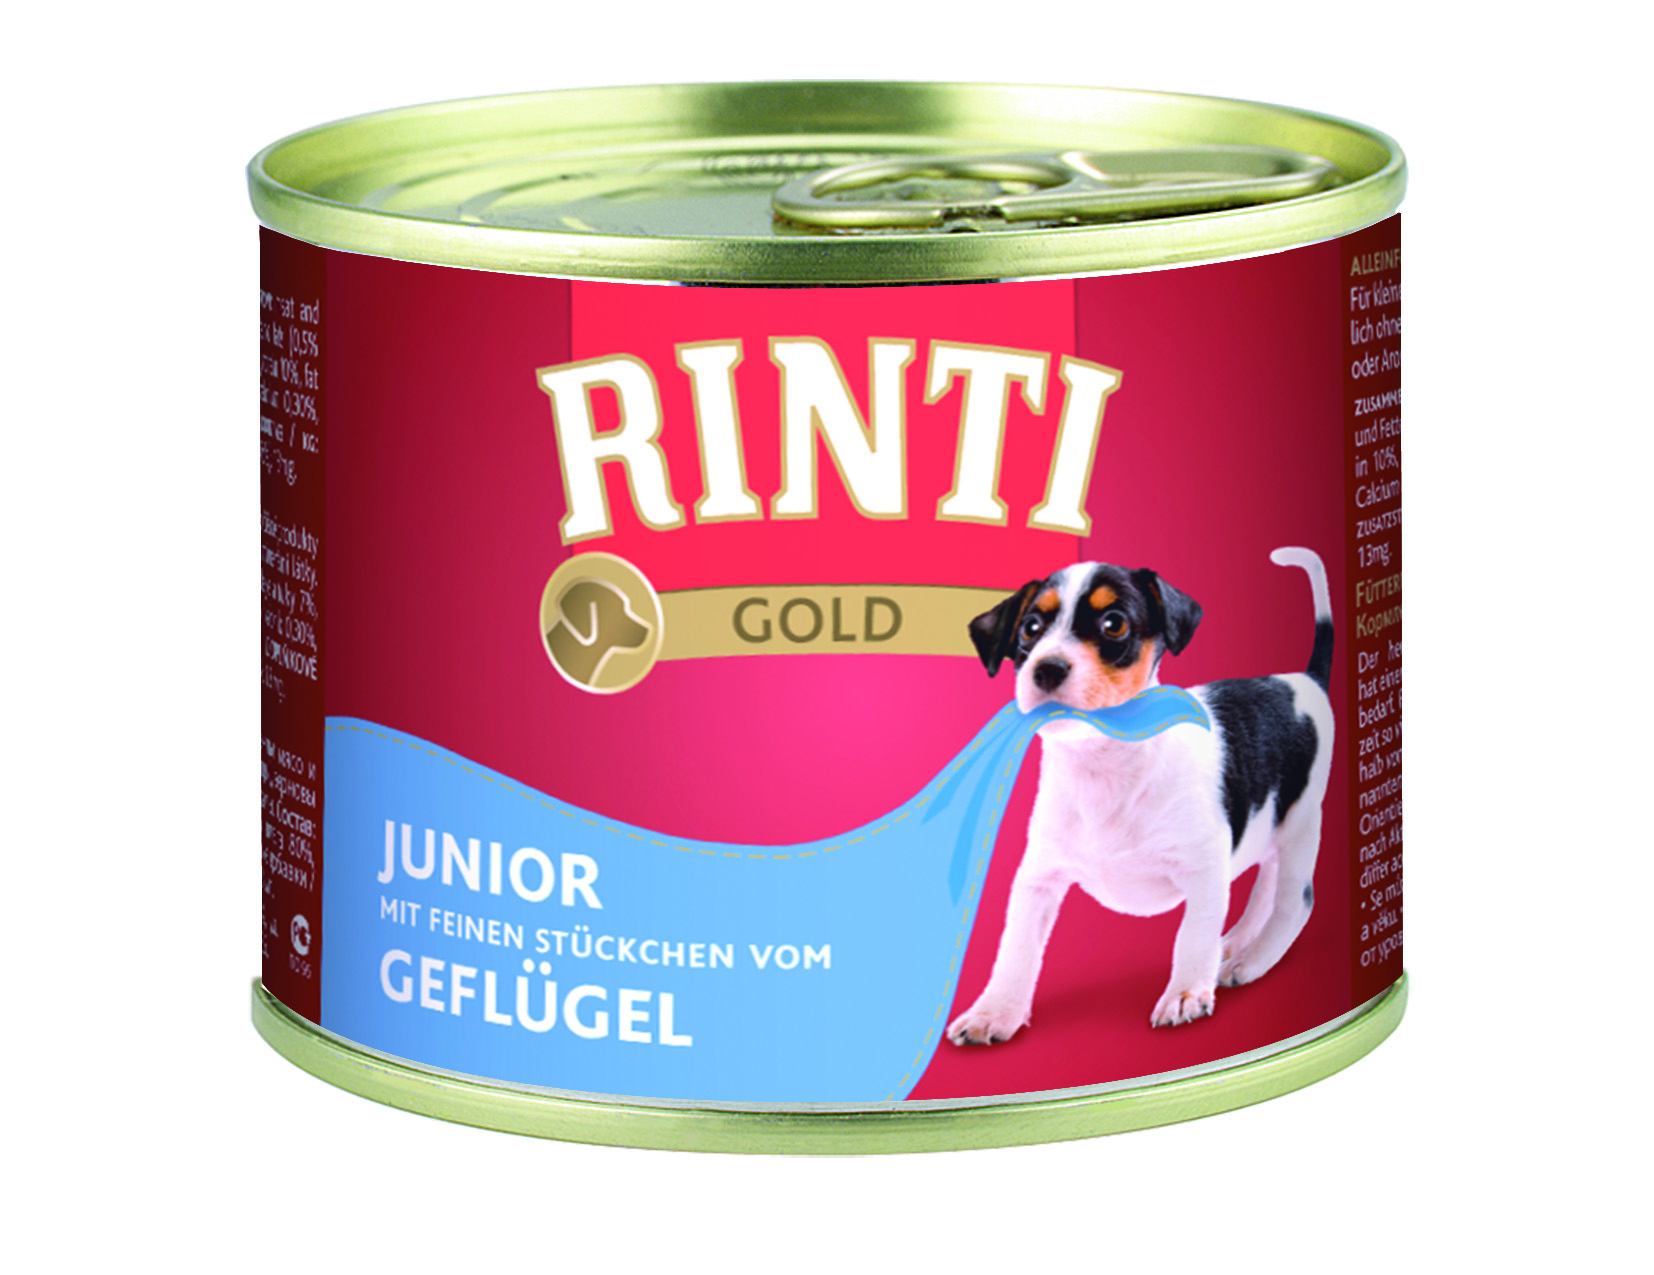 Rinti Gold - Junior, 185 g, Geflügel